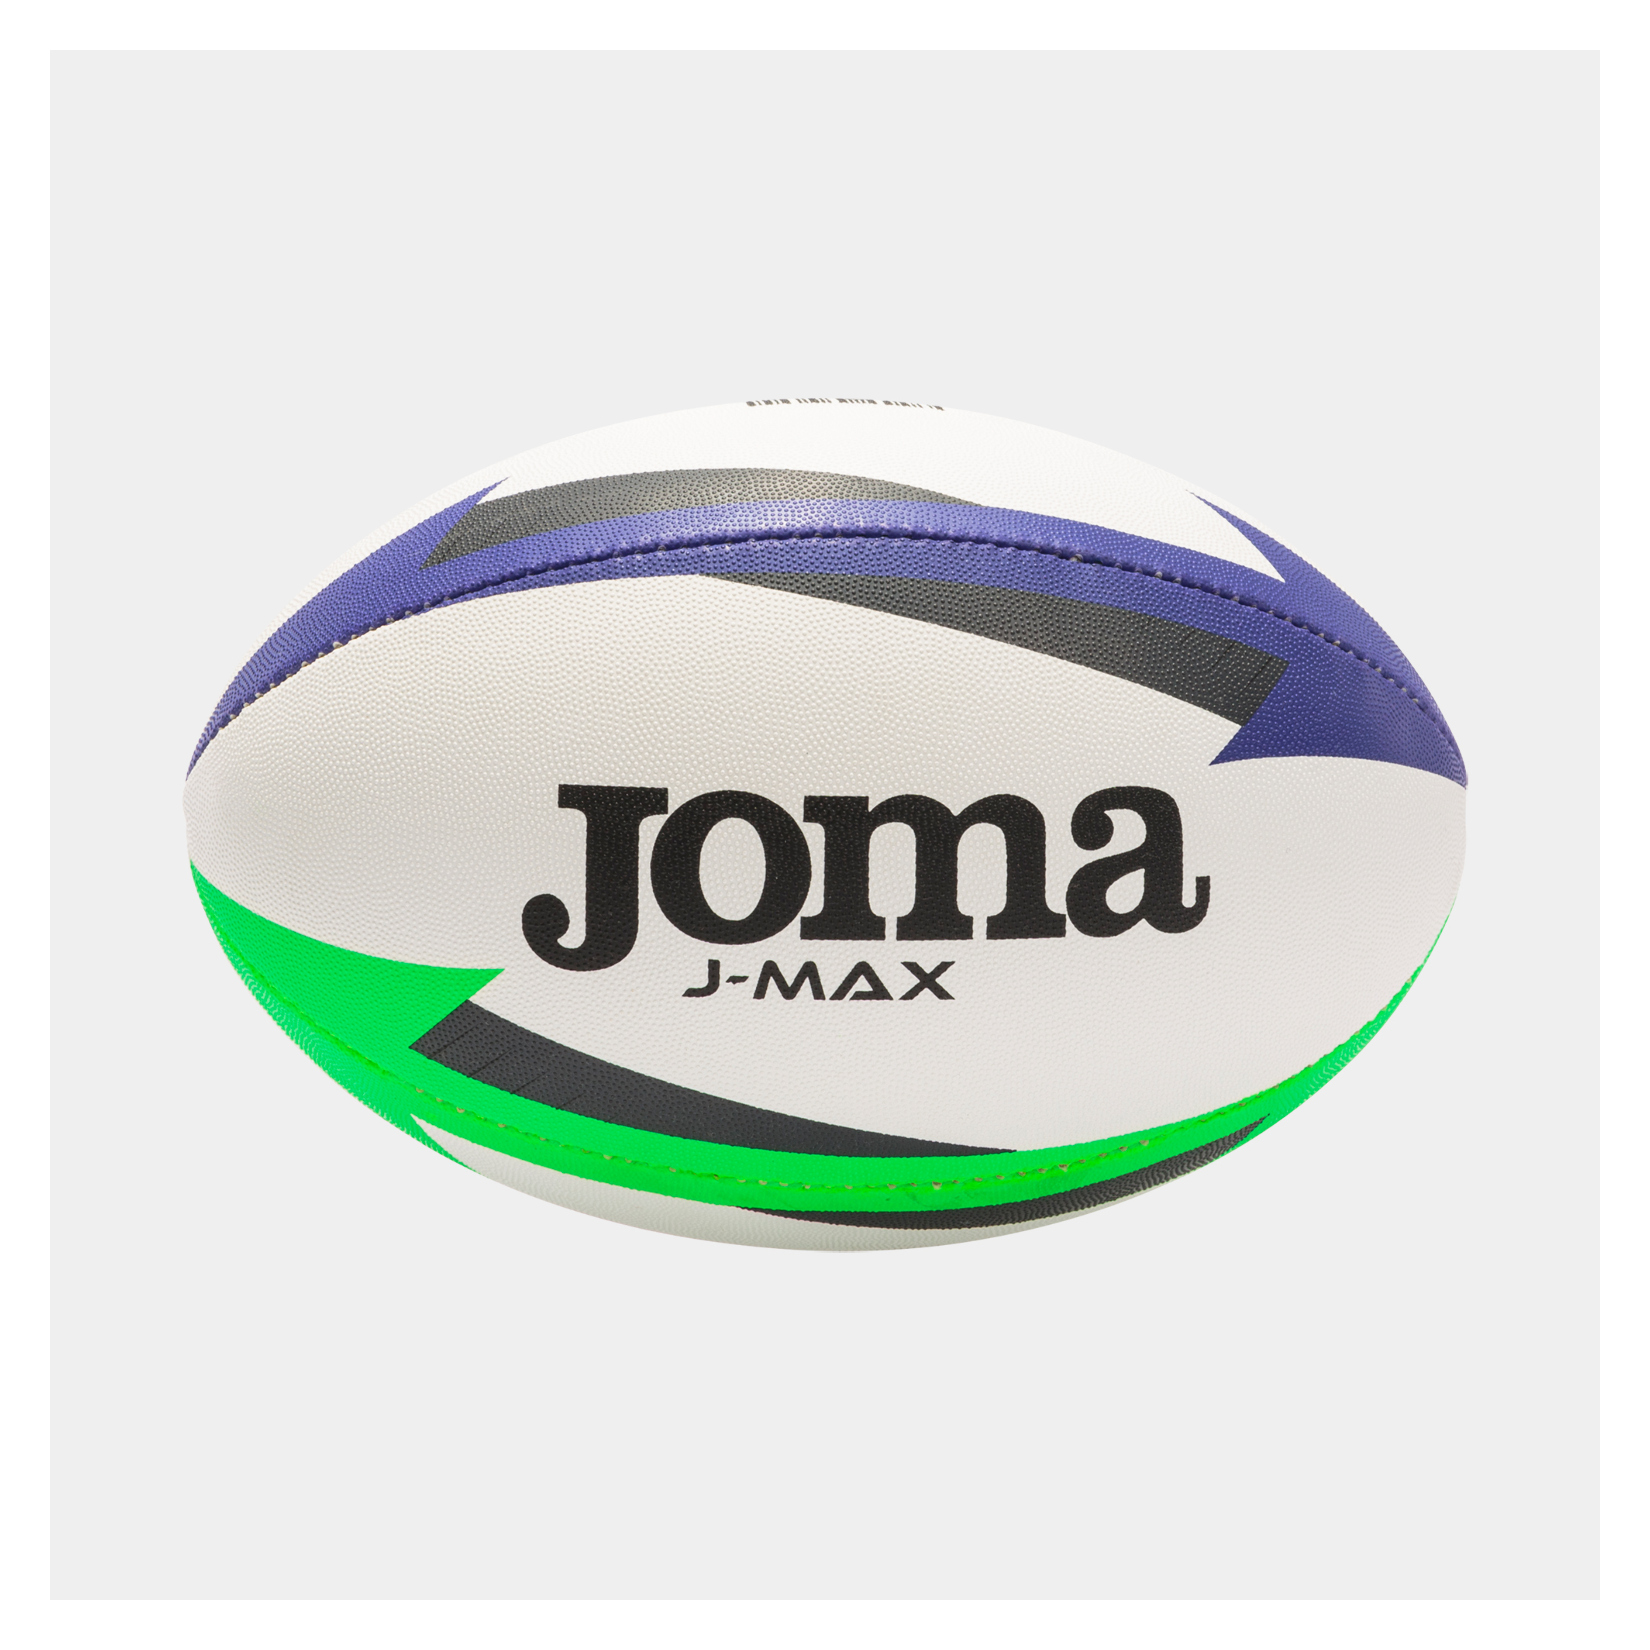 Joma J-Max Ball - Size 4